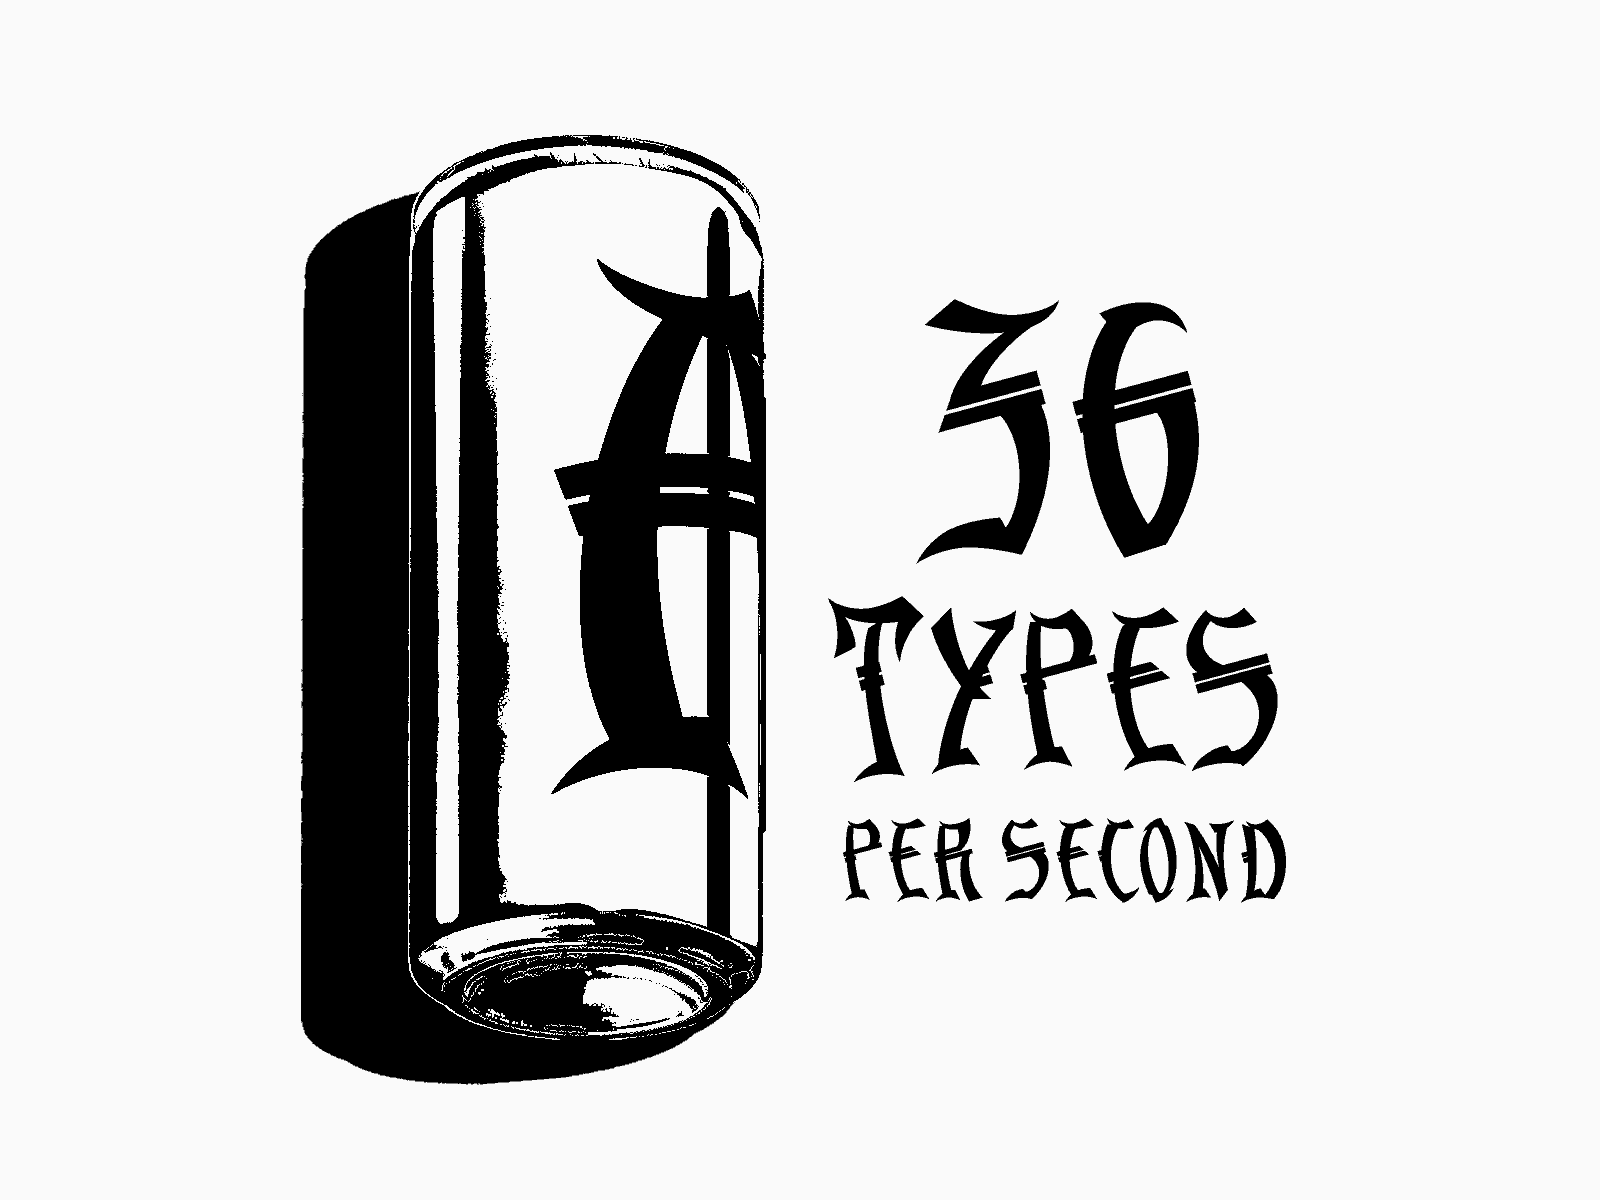 36 Types Per Sesond